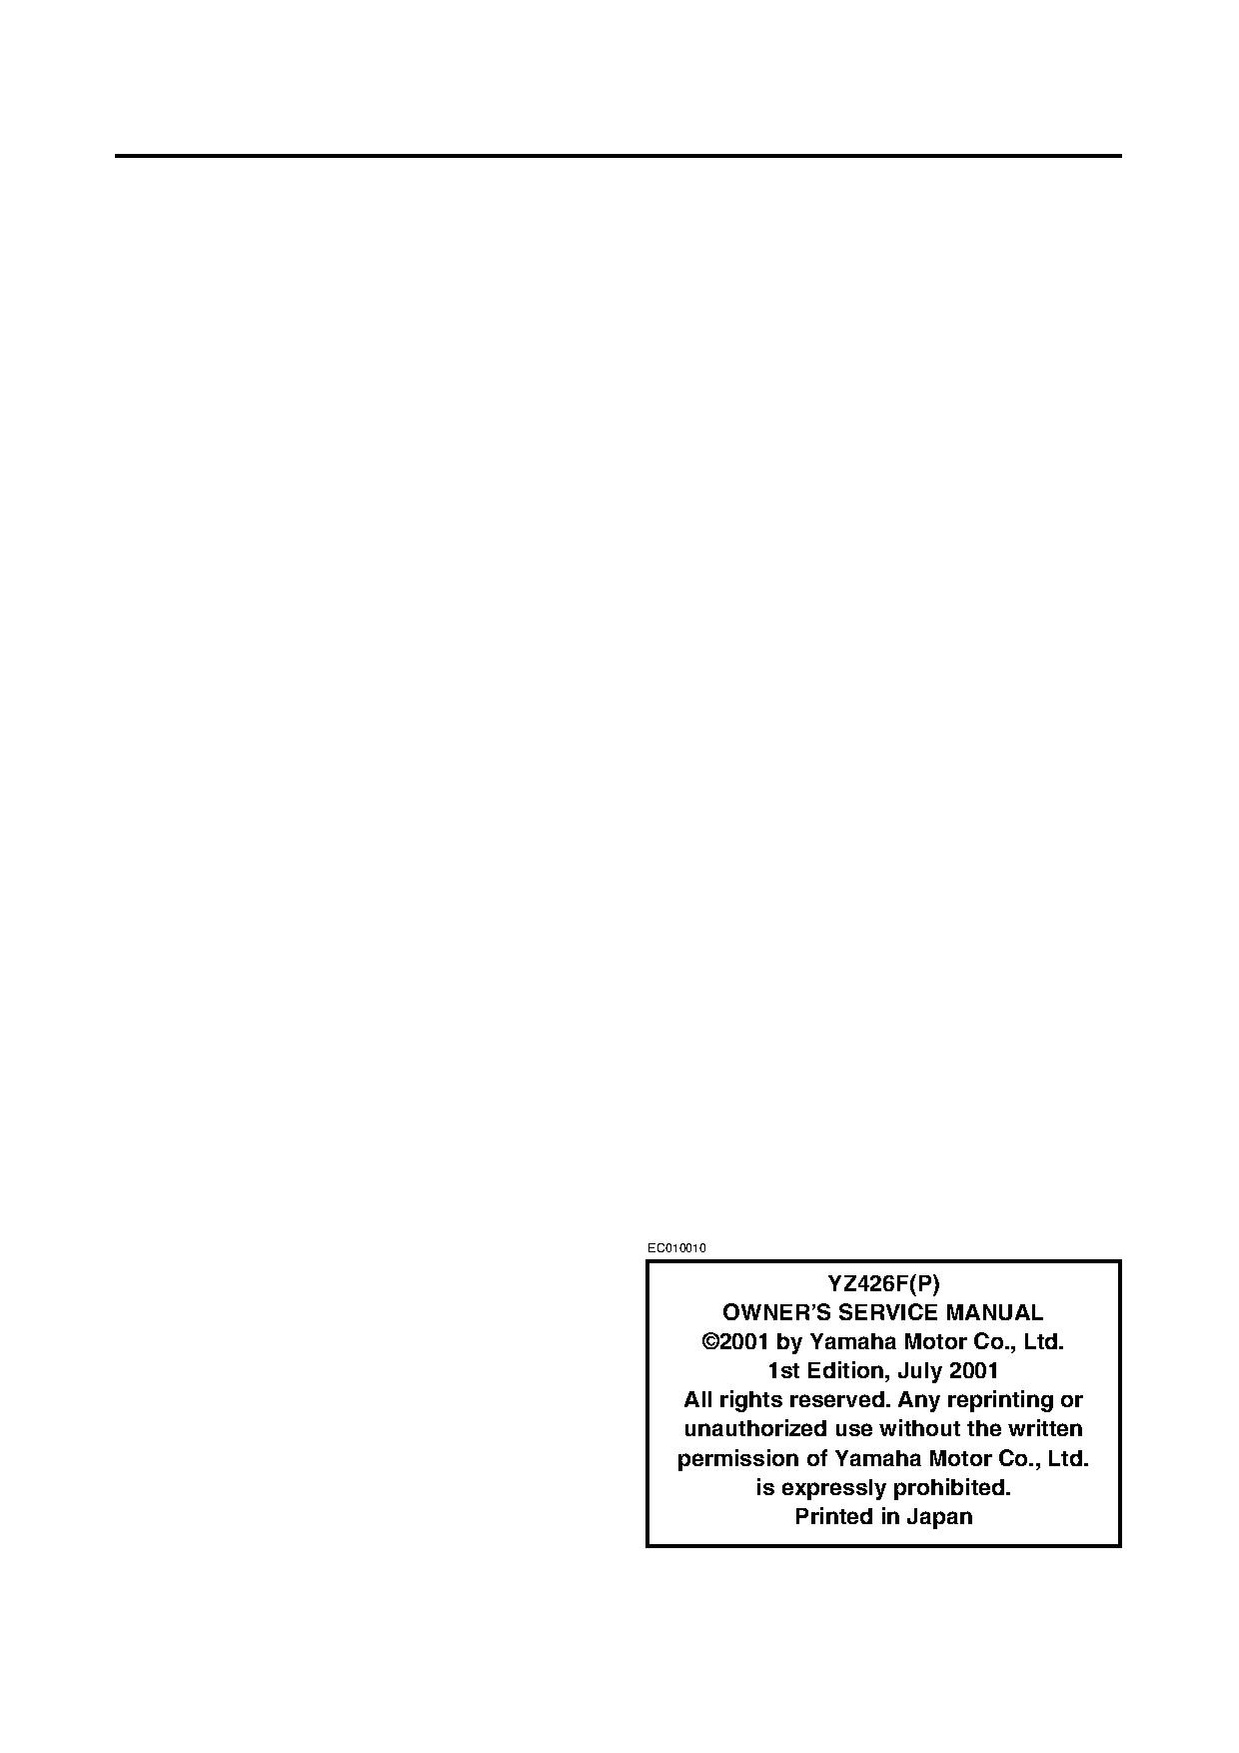 File:2002 Yamaha YZ426F P Owners Service Manual.pdf